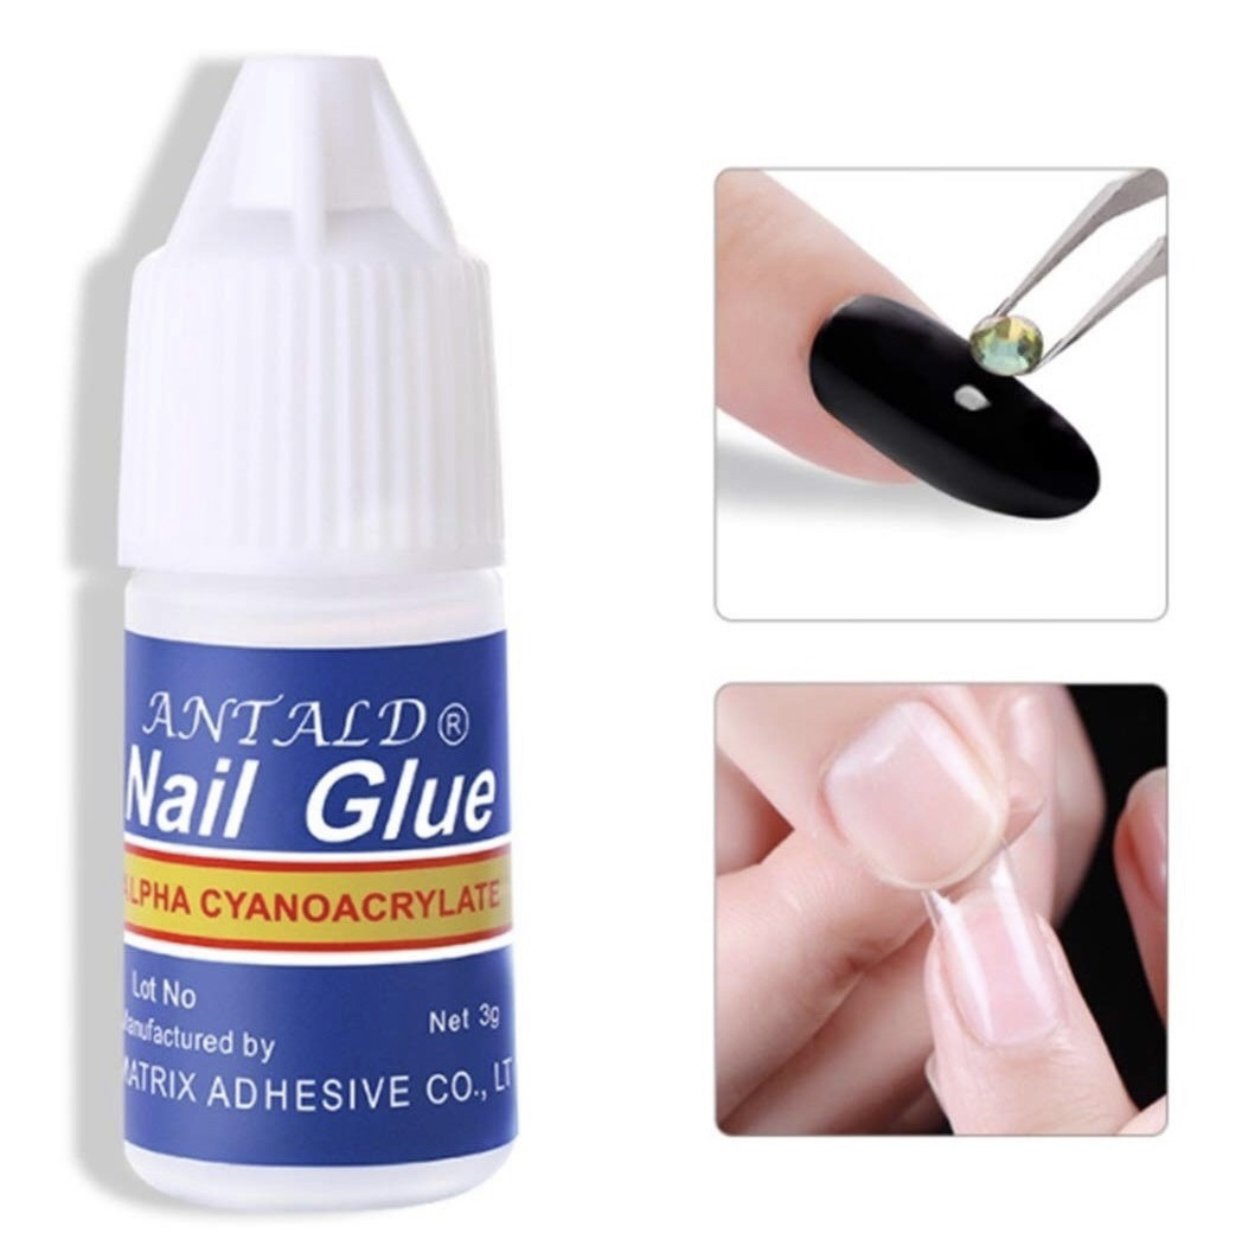 Pegamento nail glue con gotero - Distri Nails - Insumos para uñas